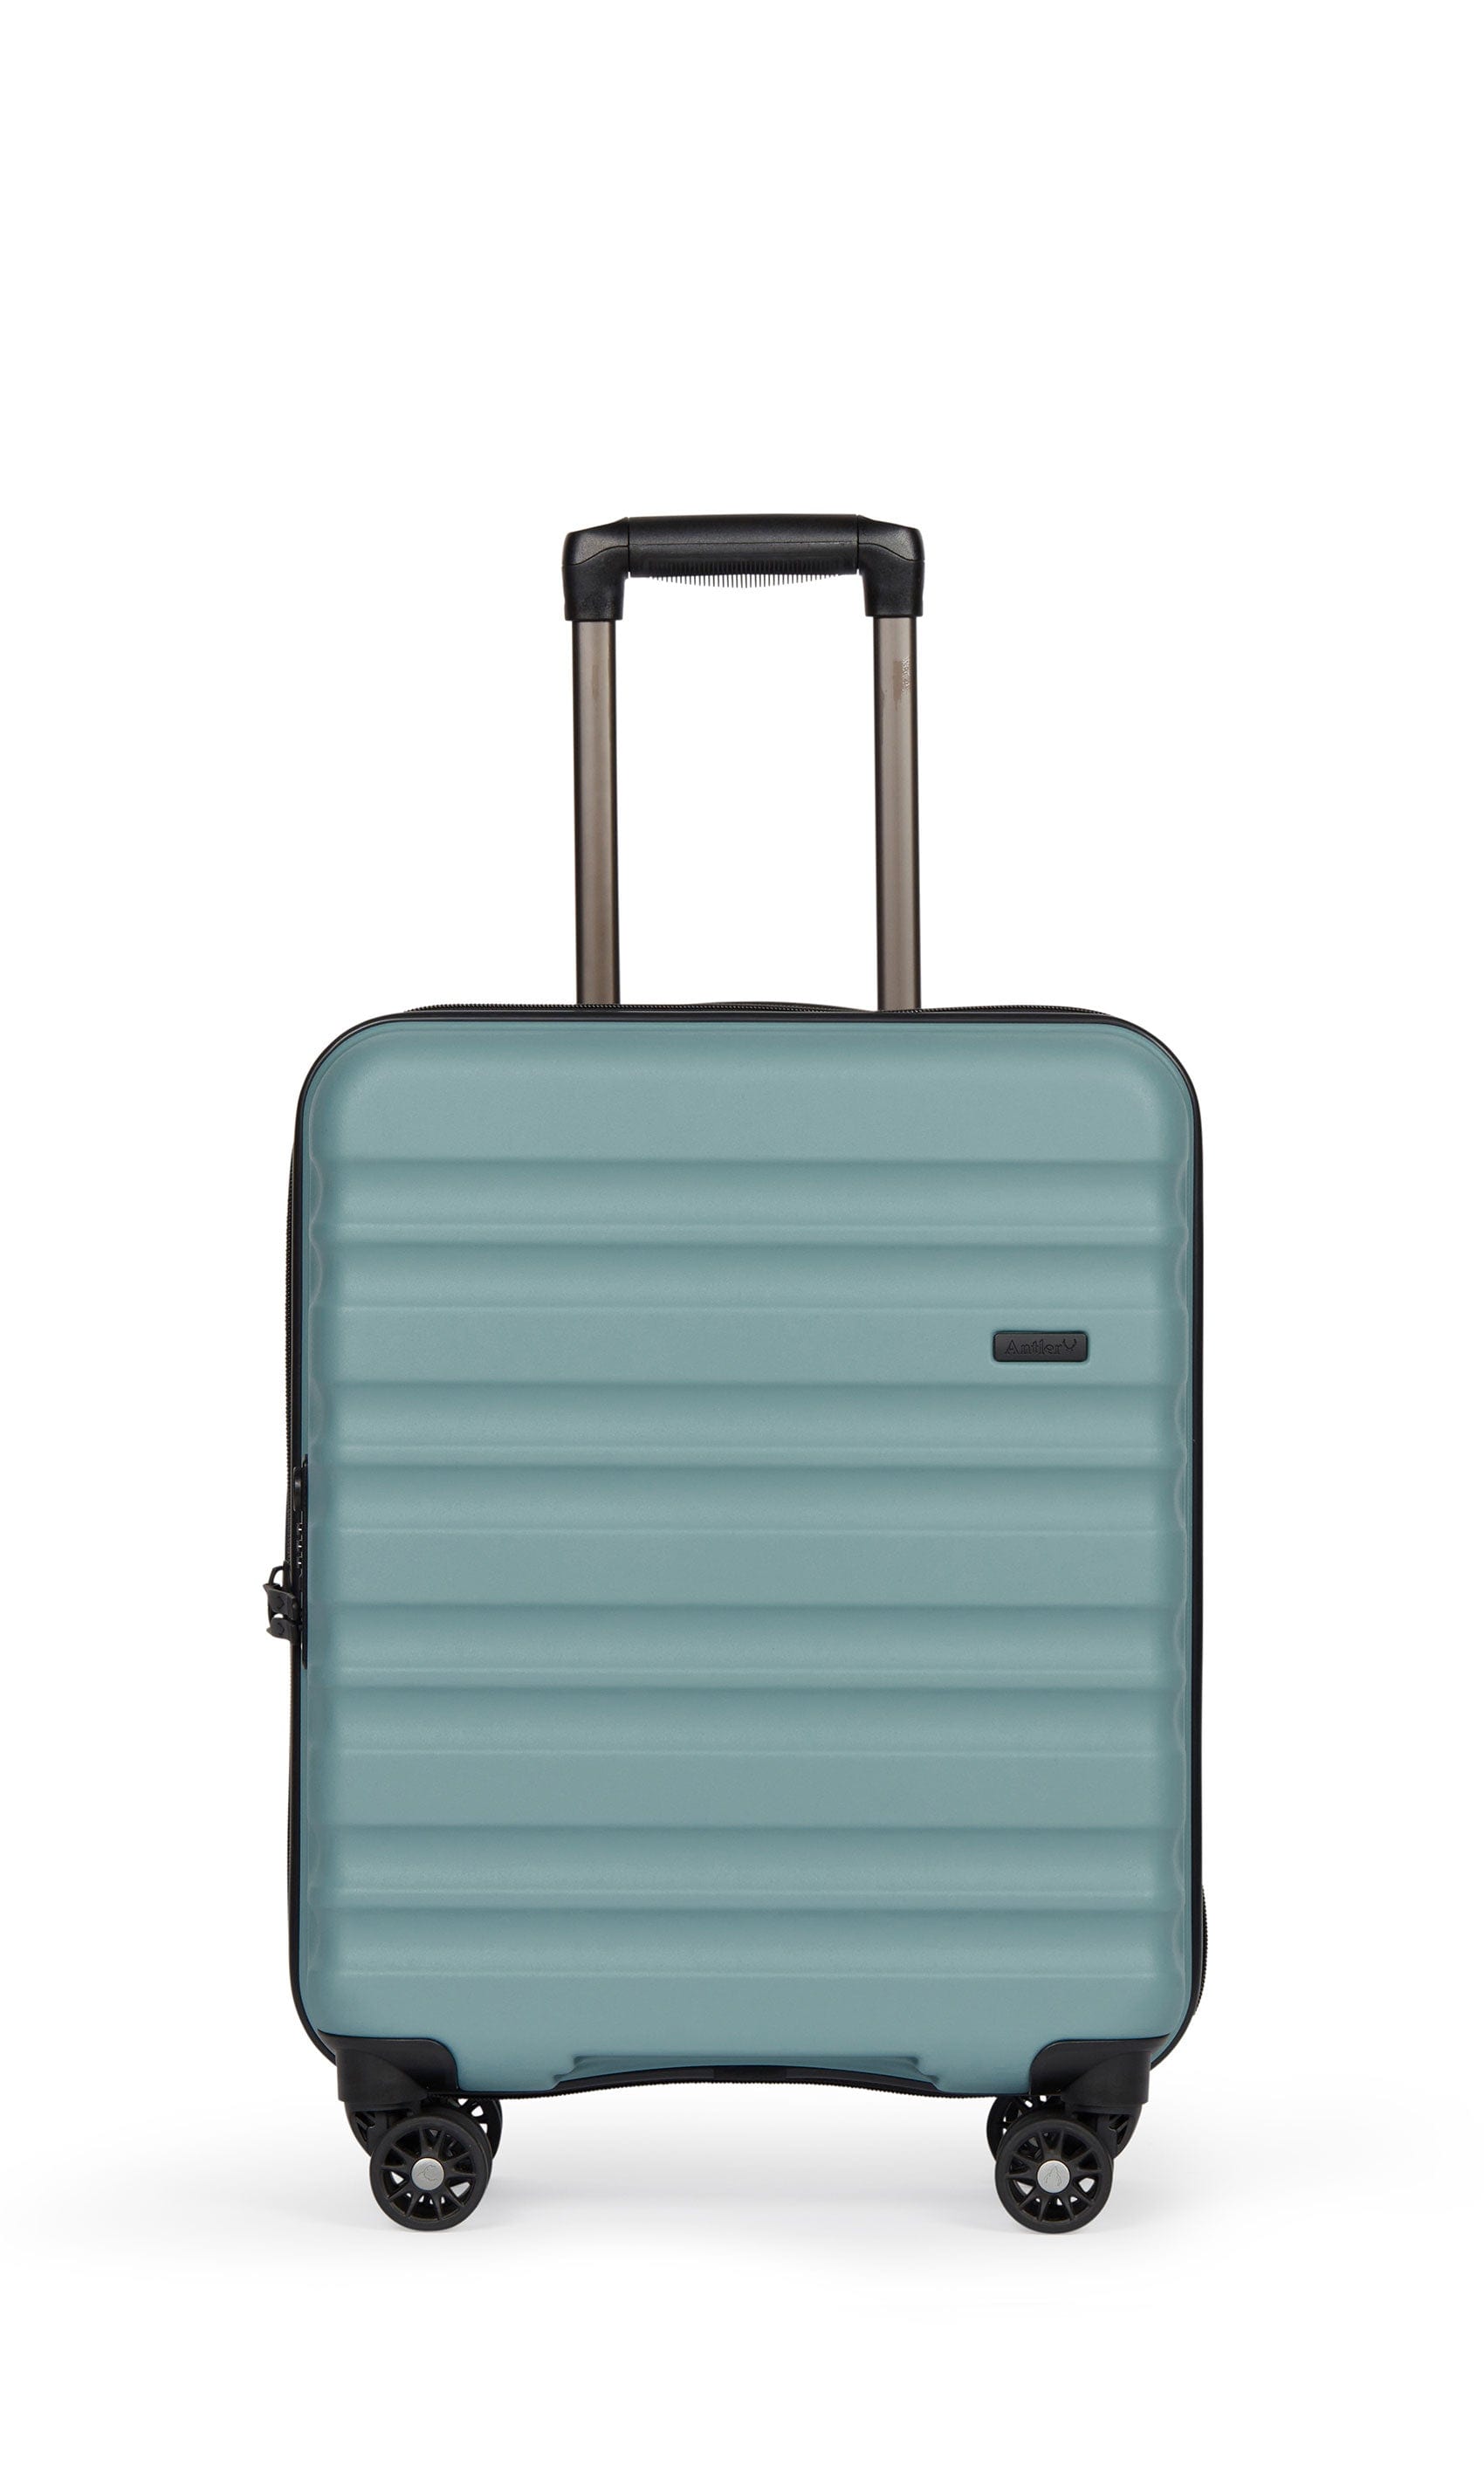 Antler Luggage -  Clifton set in mineral - Hard Suitcases Clifton Set of 3 Suitcases Mineral | Hard Suitcase | Antler UK